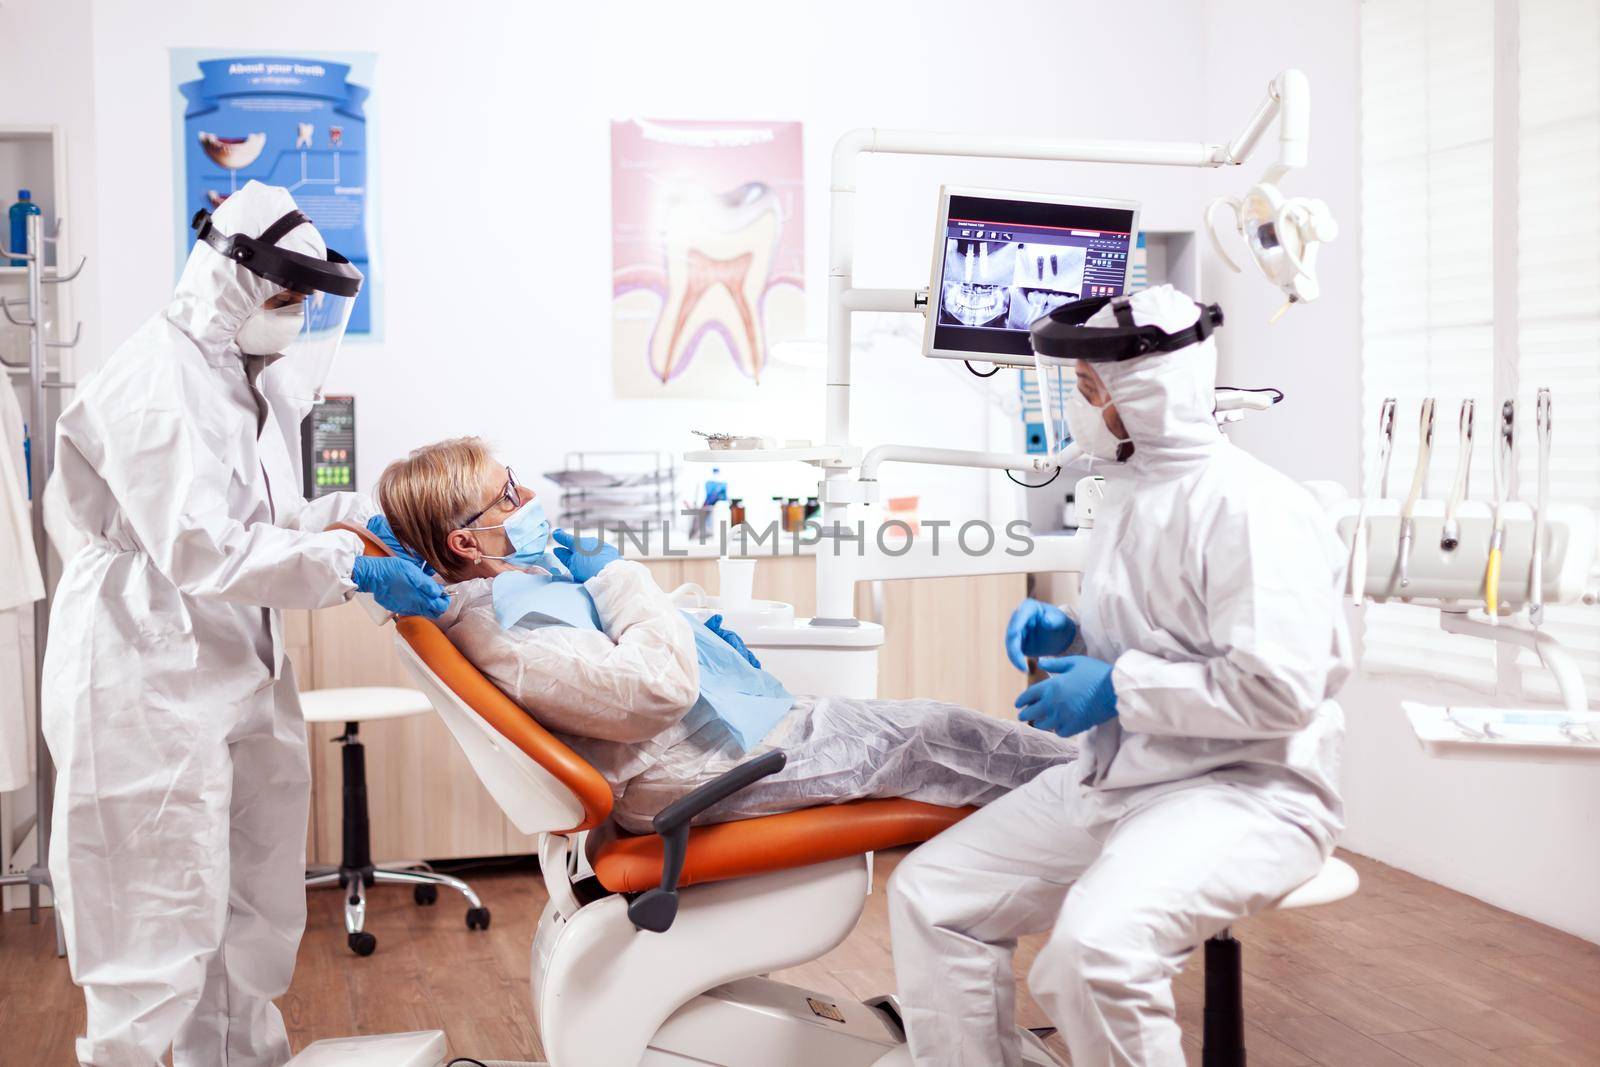 Dentist wearing equipment agasint coronavirus by DCStudio